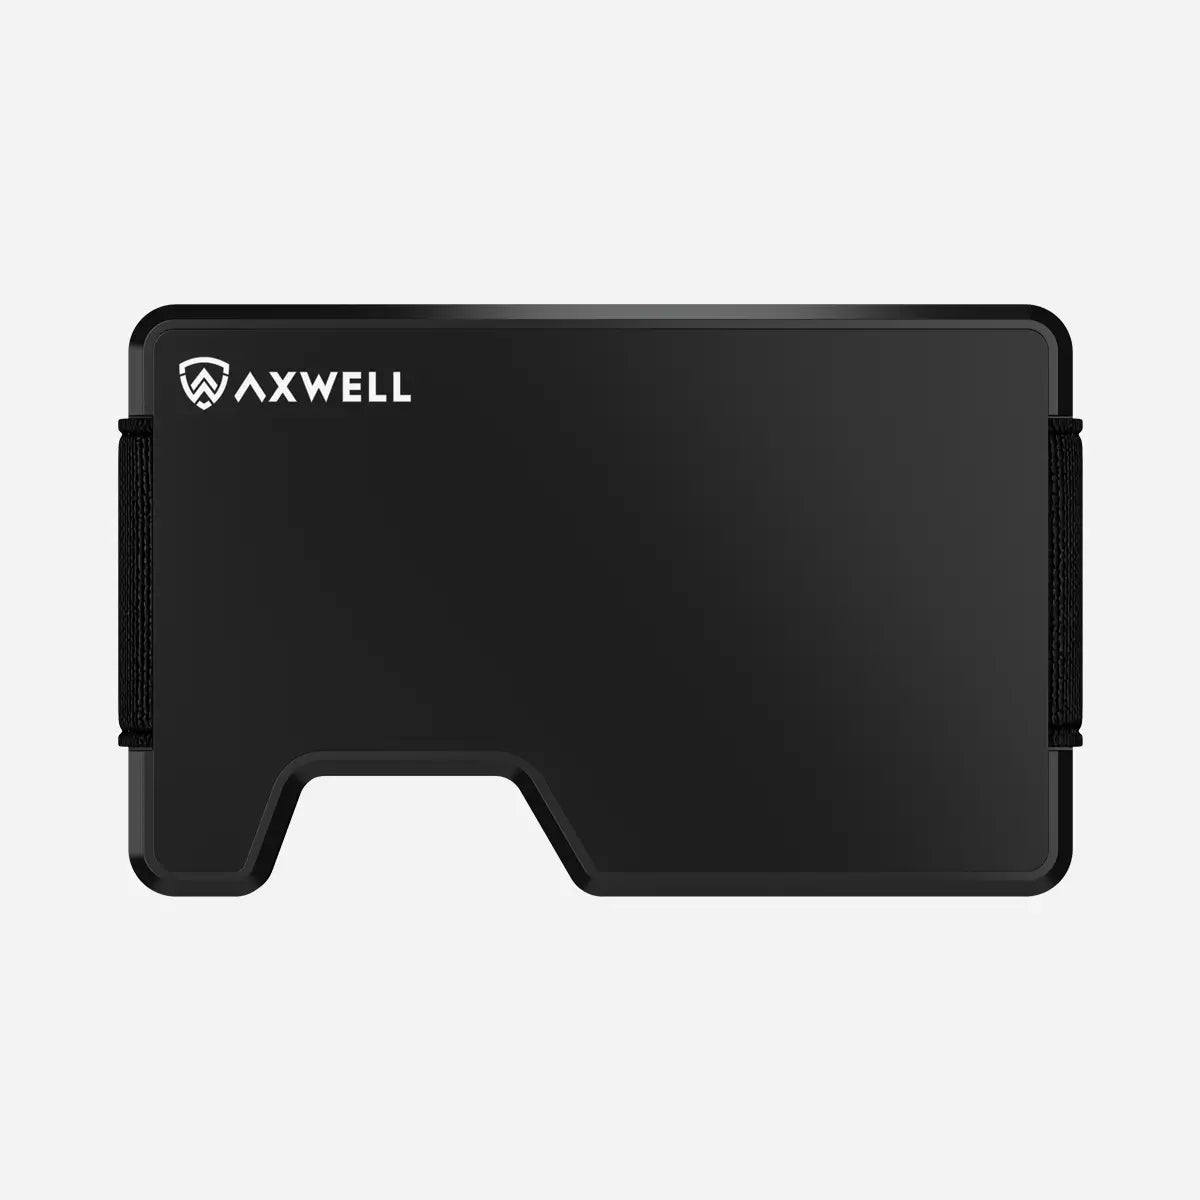 Axwell Wallet - Jet Black